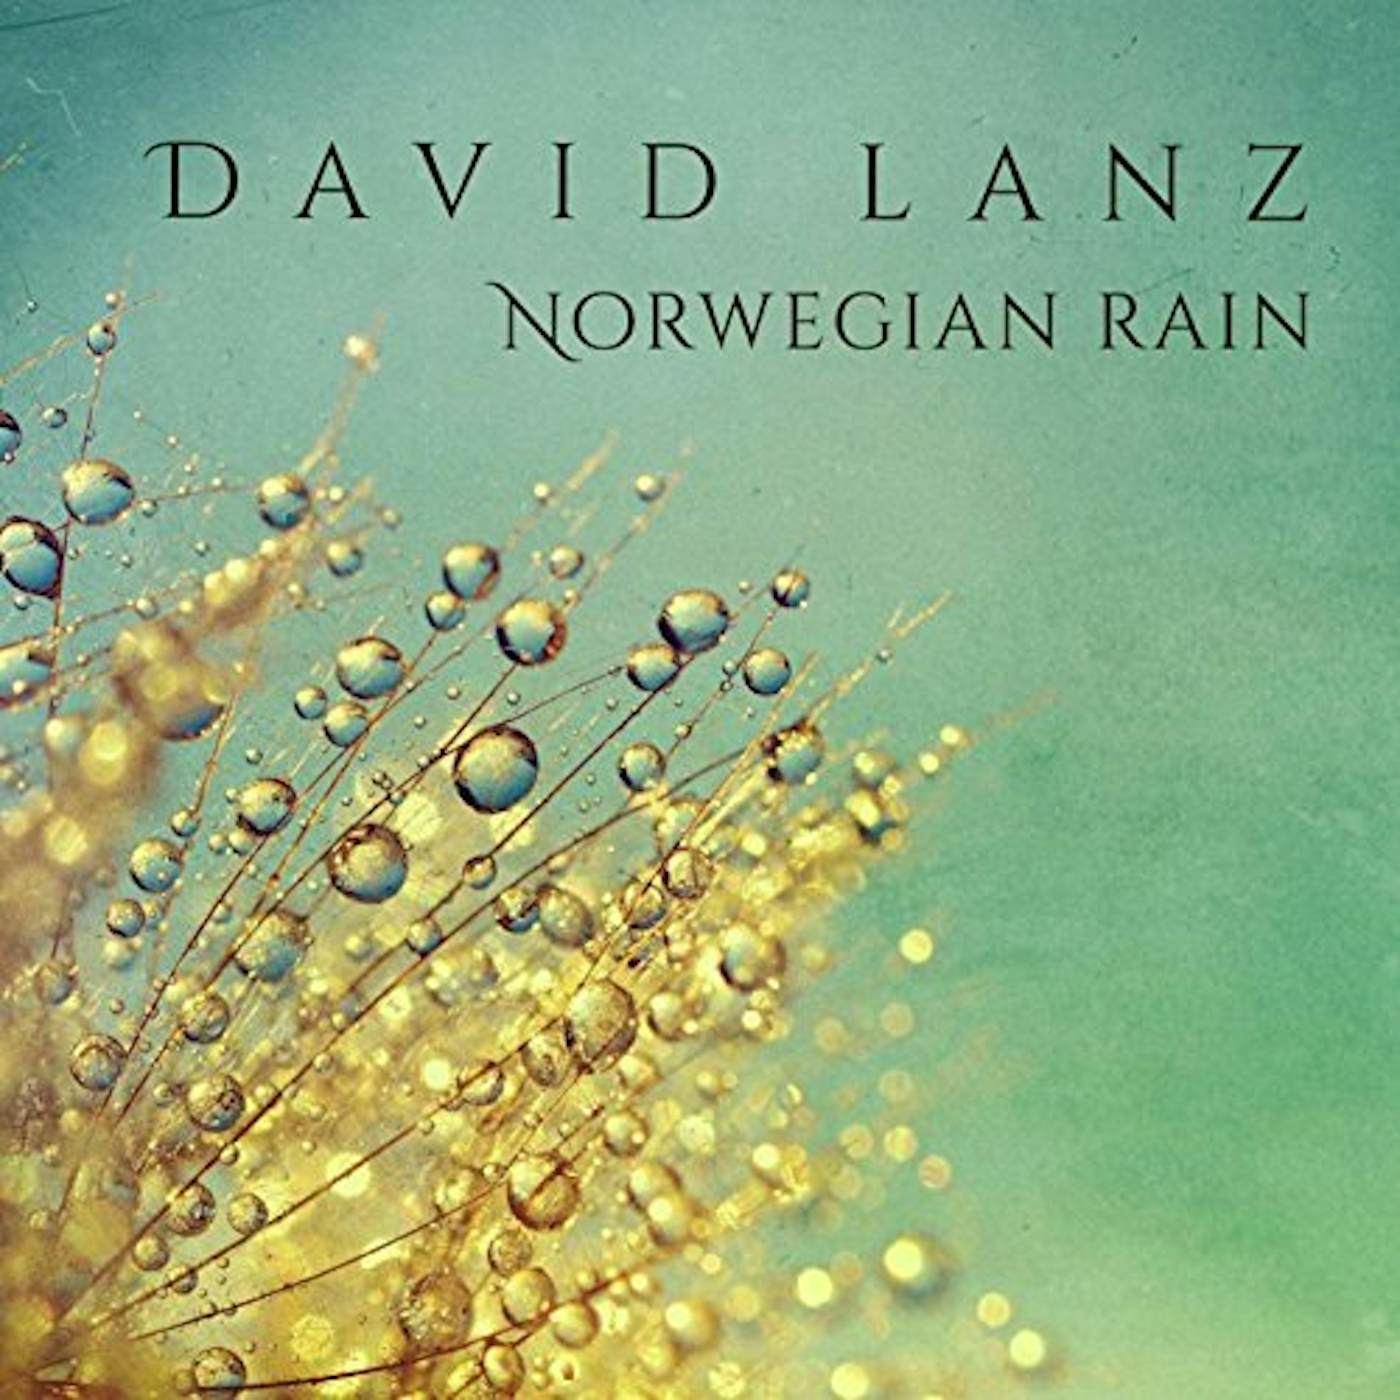 David Lanz NORWEGIAN RAIN CD